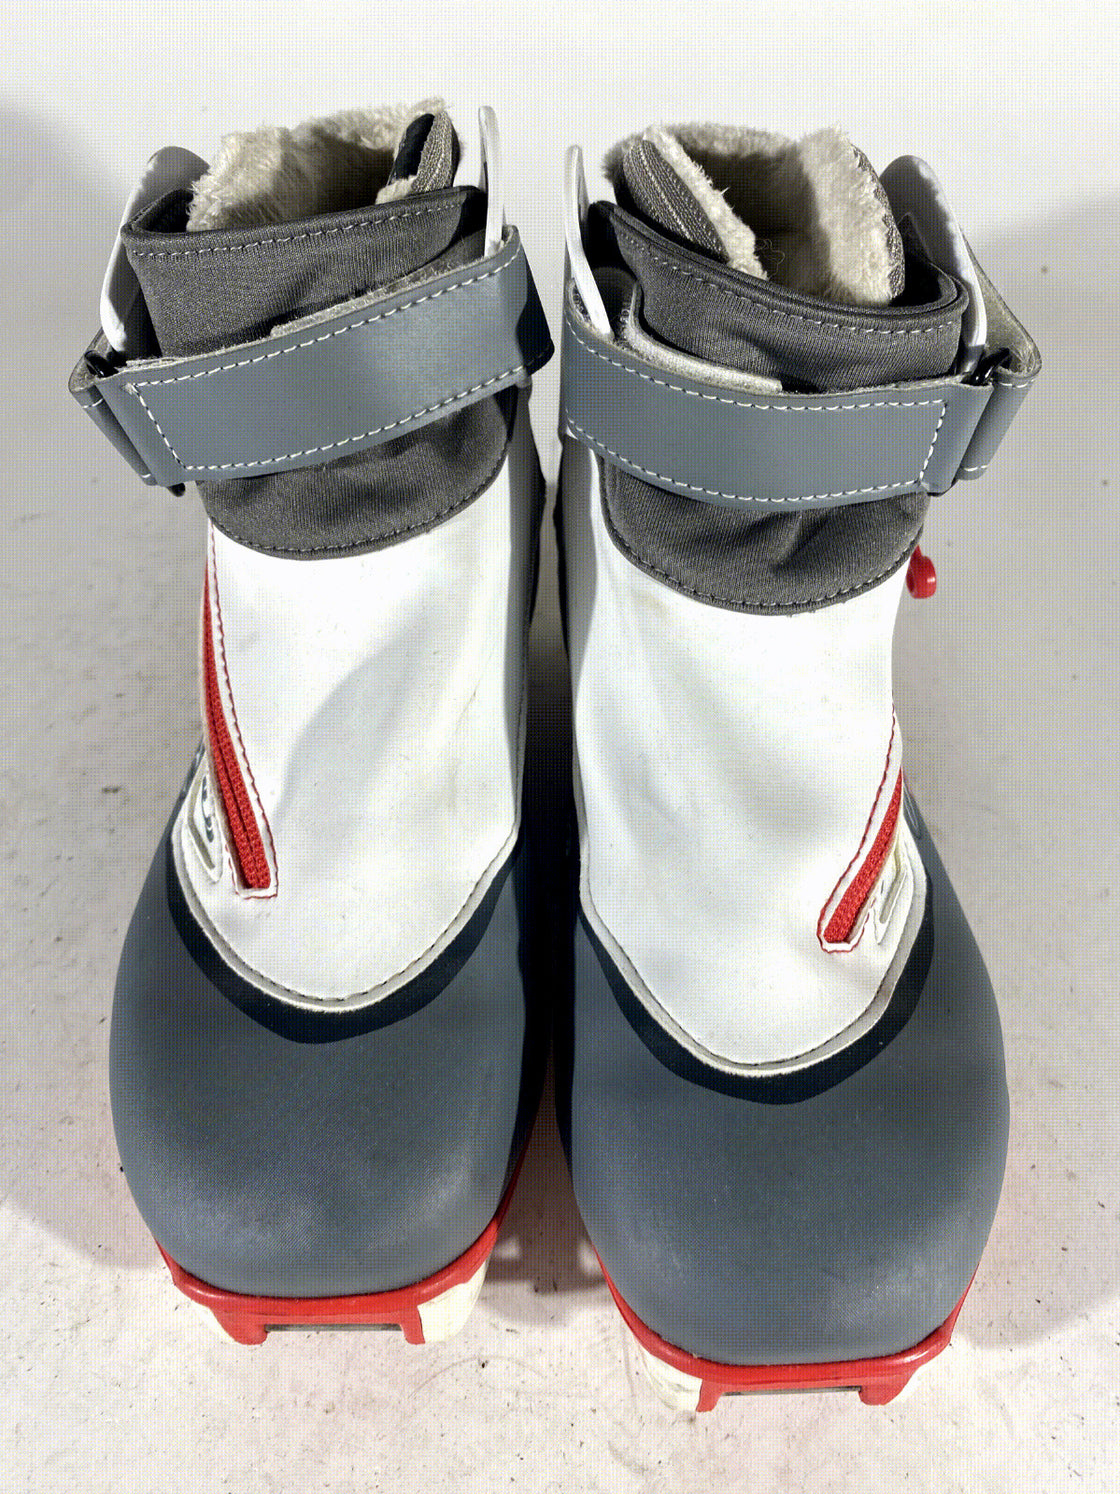 SALOMON Siam 7 Classic  Cross Country Ski Boots Size EU37 1/3 US6 SNS Pilot